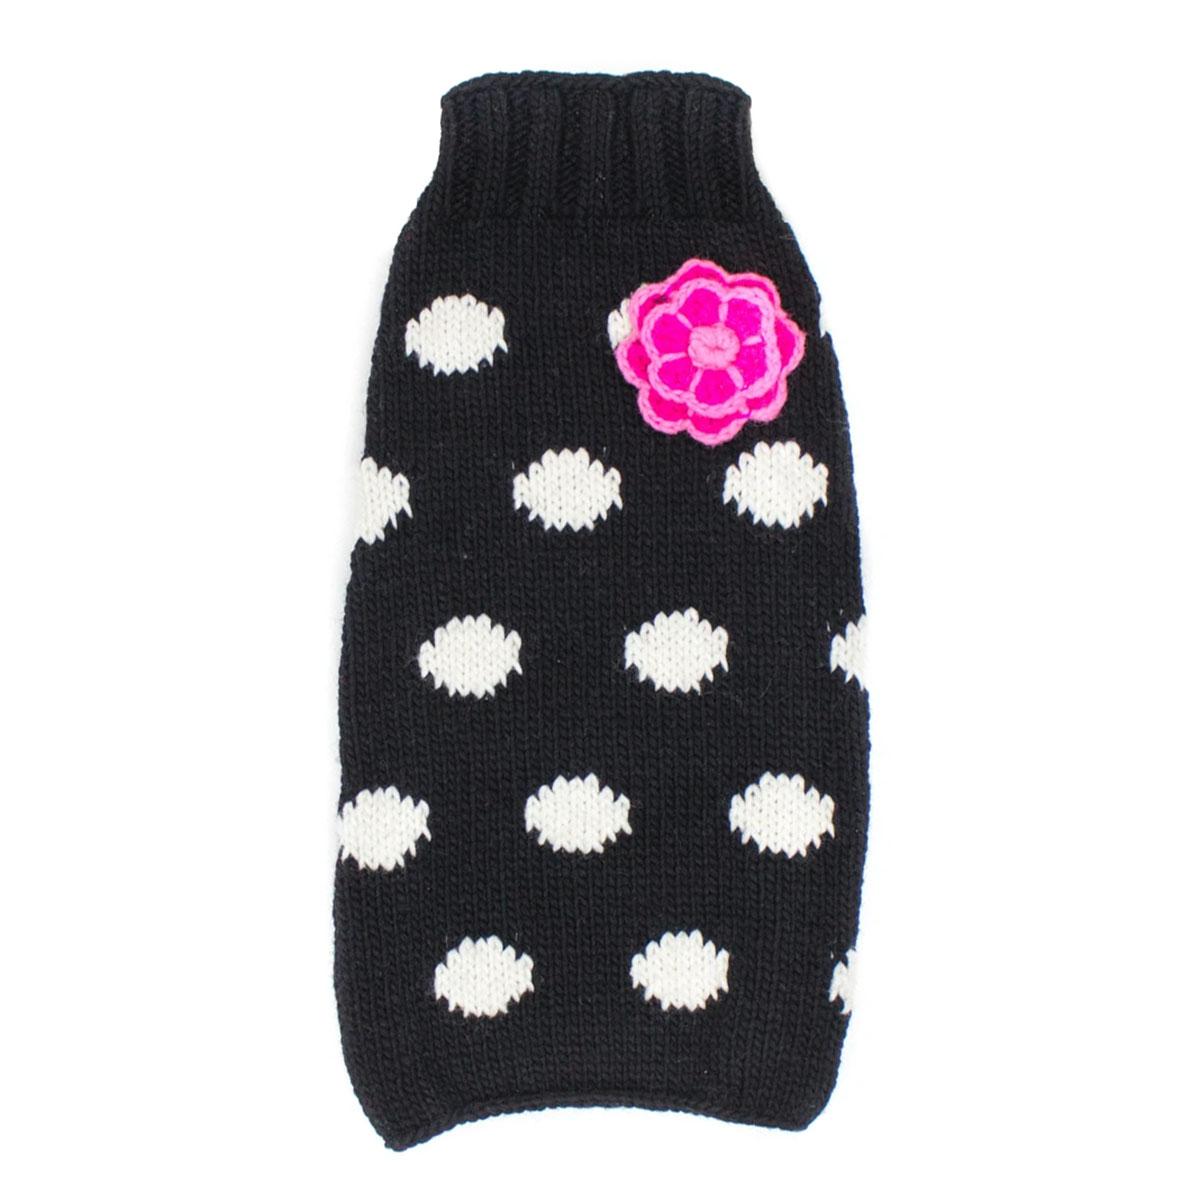 Chilly Dog Handmade Polka Dot Wool Dog Sweater - Black